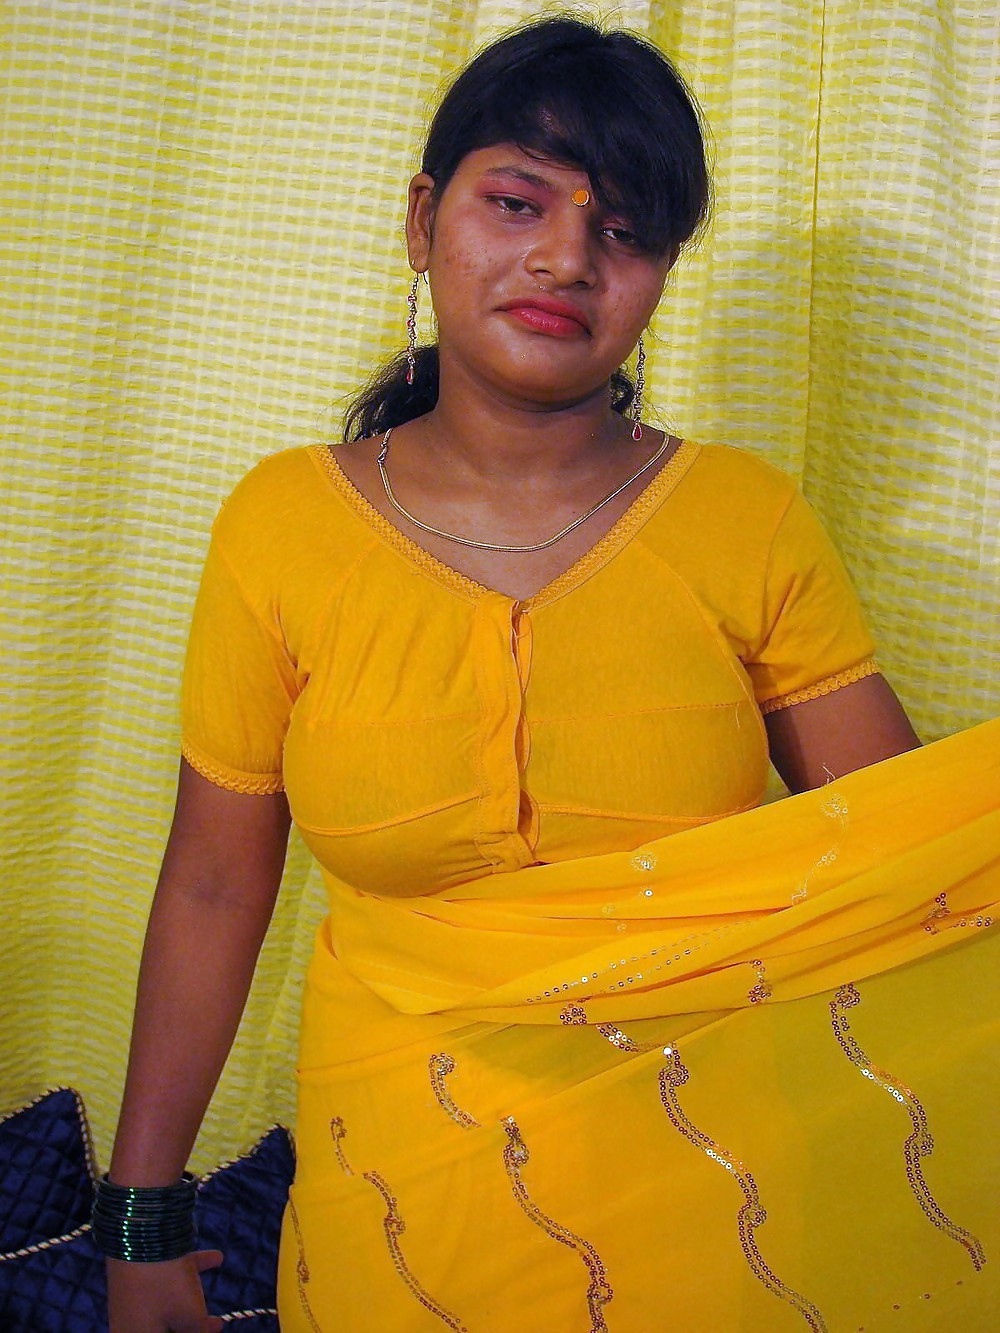 Desi Bala Chaud Et Sexy - Hardcore Indien #24976252